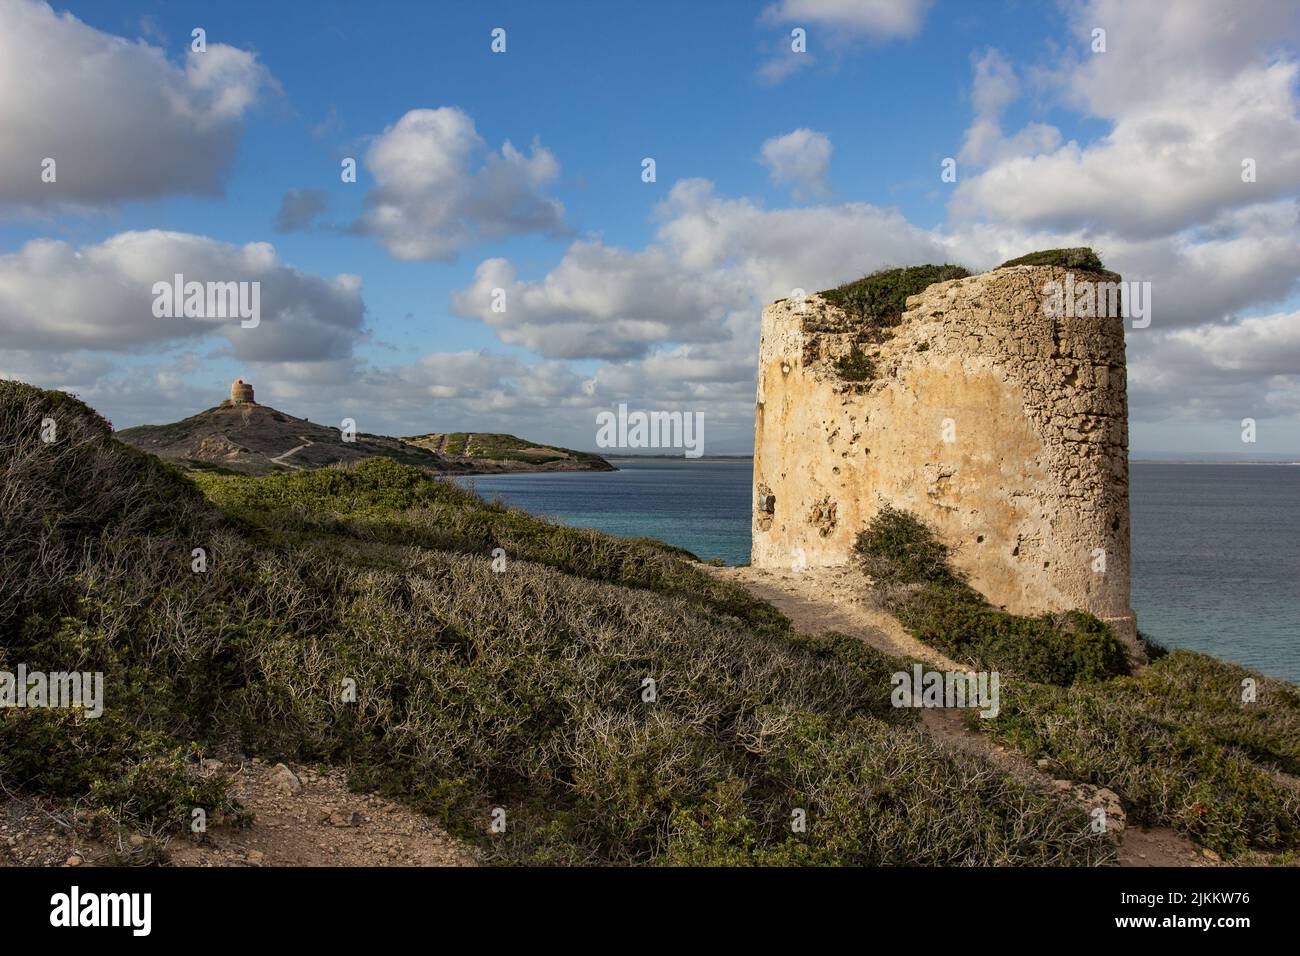 A scenic view of Choban-Kule tower in Crimea, Ukraine Stock Photo